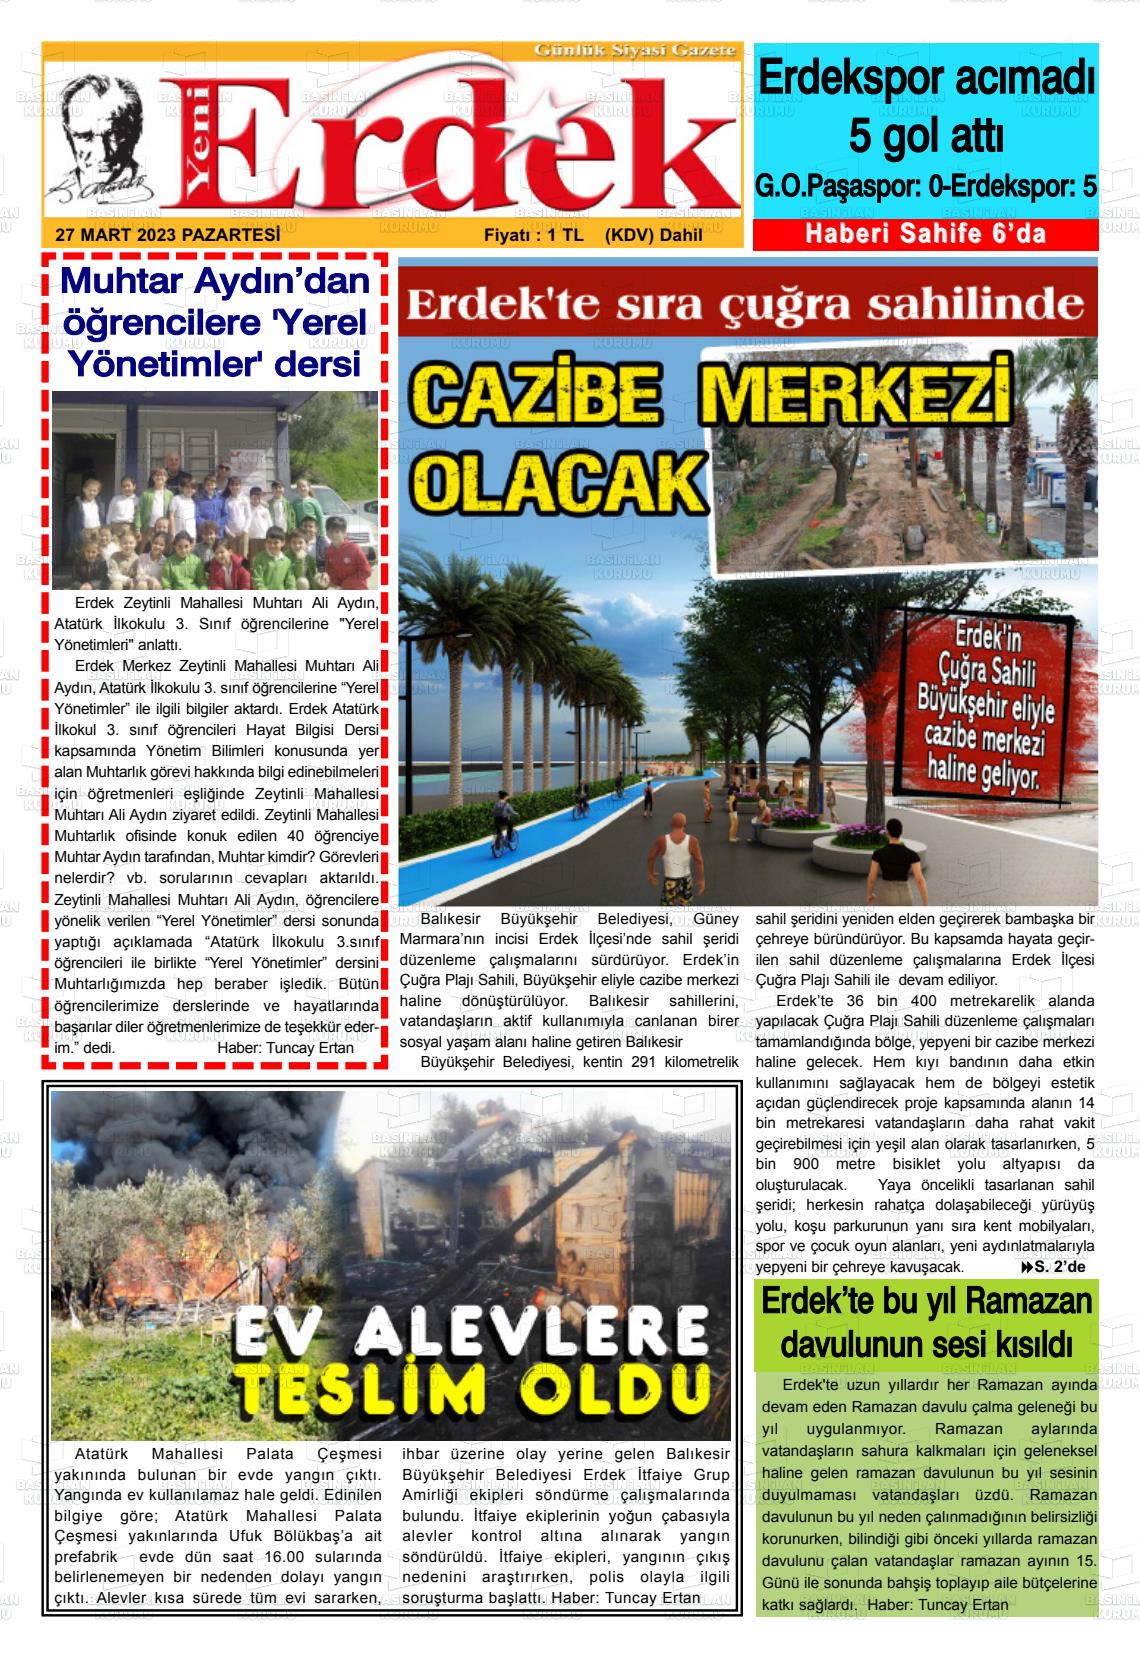 27 Mart 2023 Yeni Erdek Gazete Manşeti